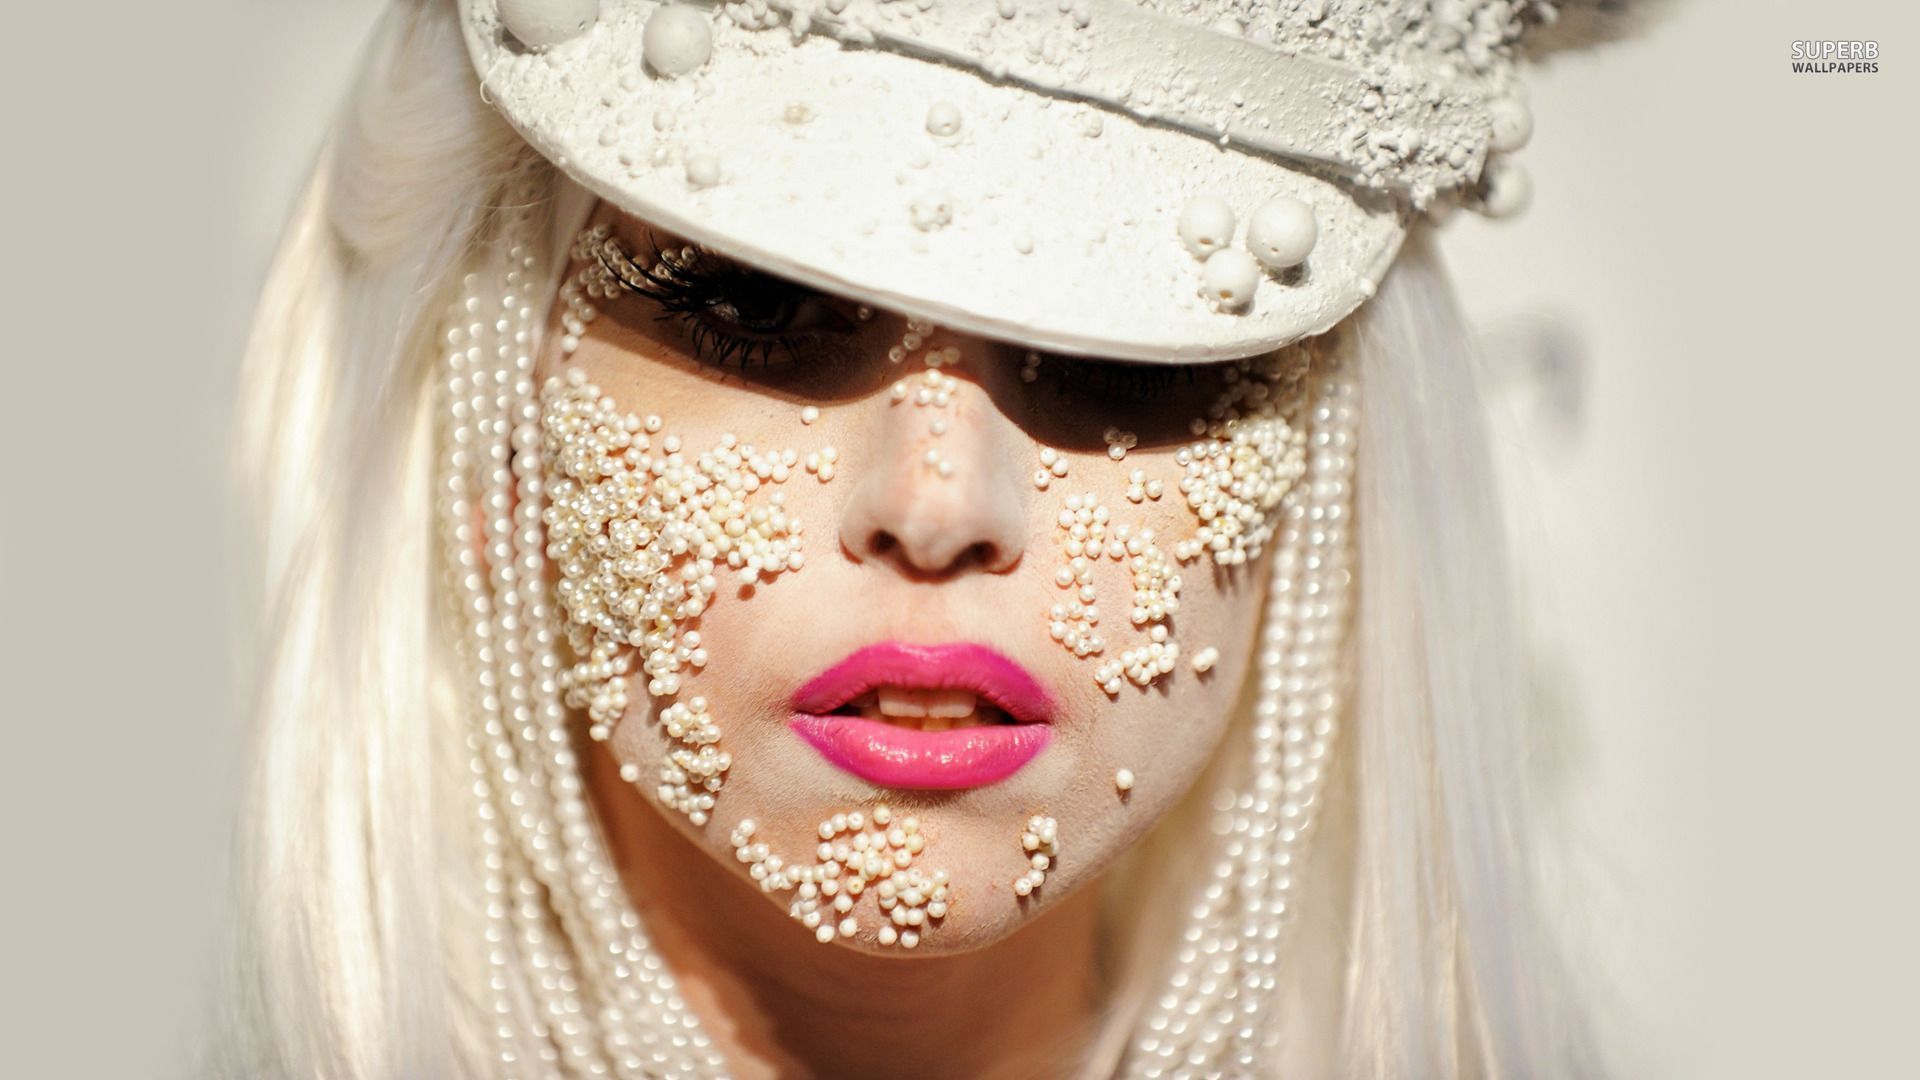 Lady Gaga wallpaper - Celebrity wallpapers - #22401